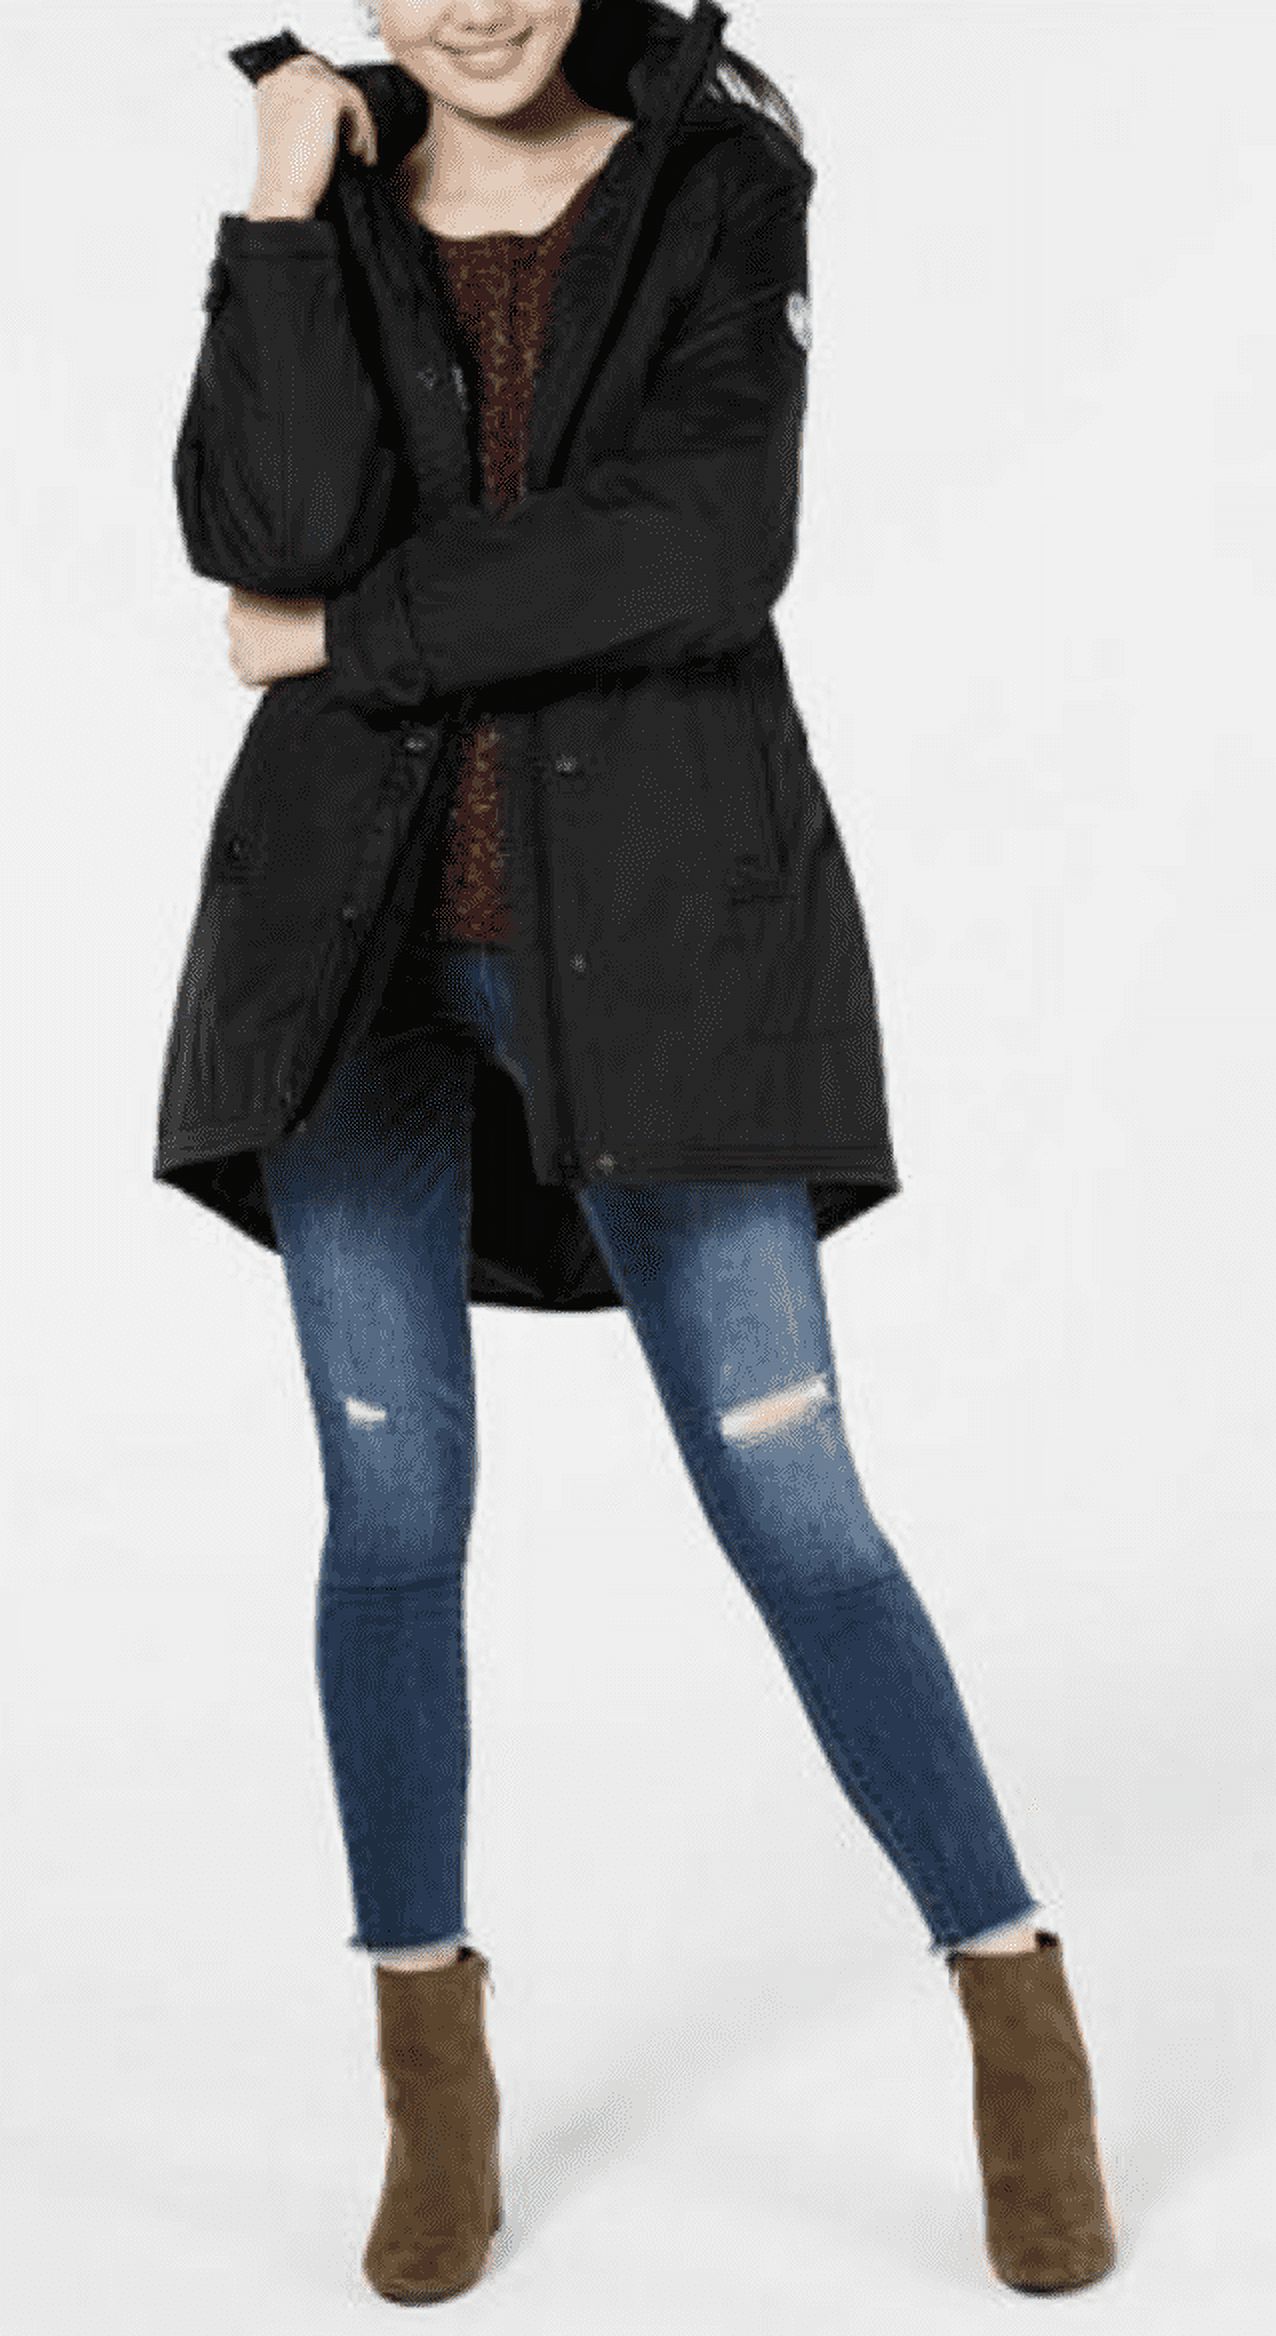 Madden Girl Womens Juniors W Polyester Coat Black XS - image 3 of 4